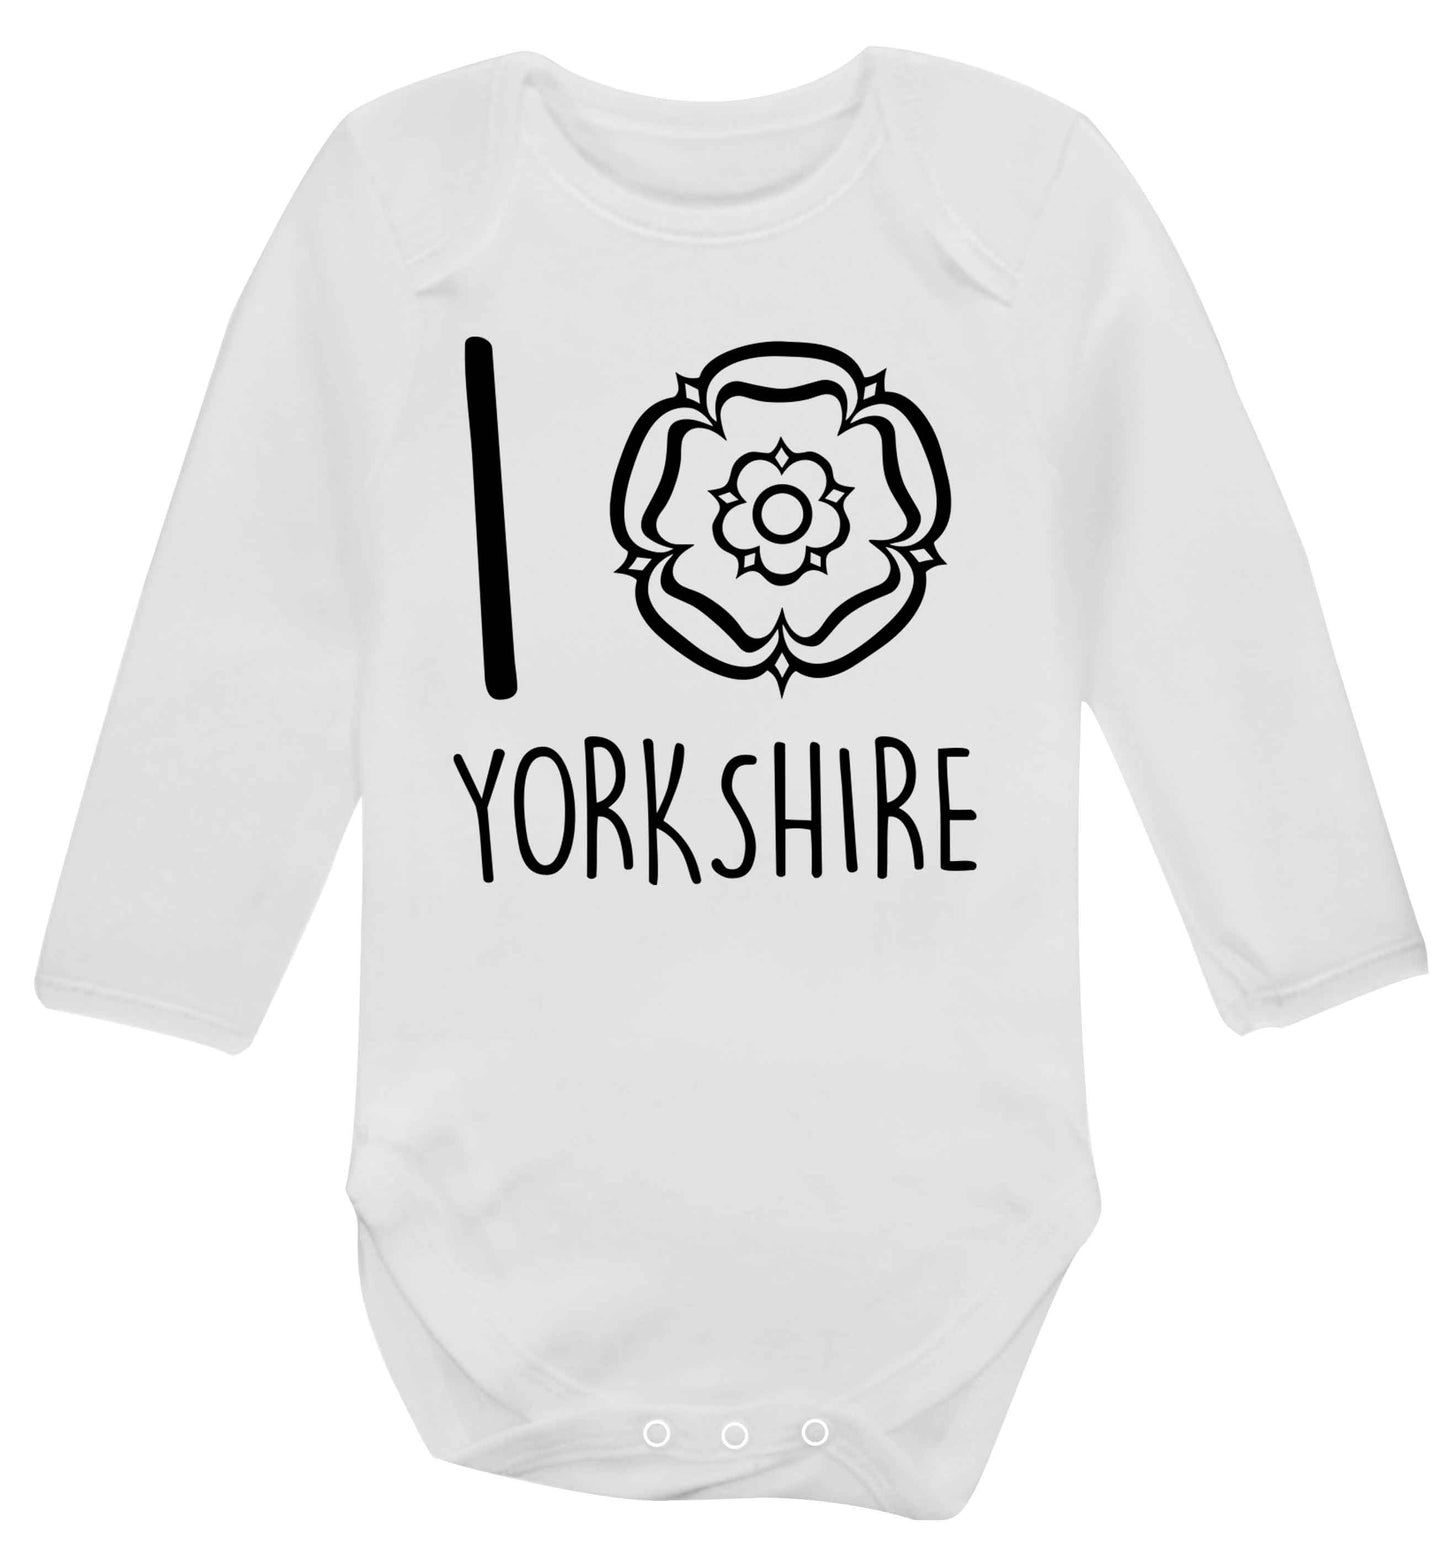 I love Yorkshire Baby Vest long sleeved white 6-12 months